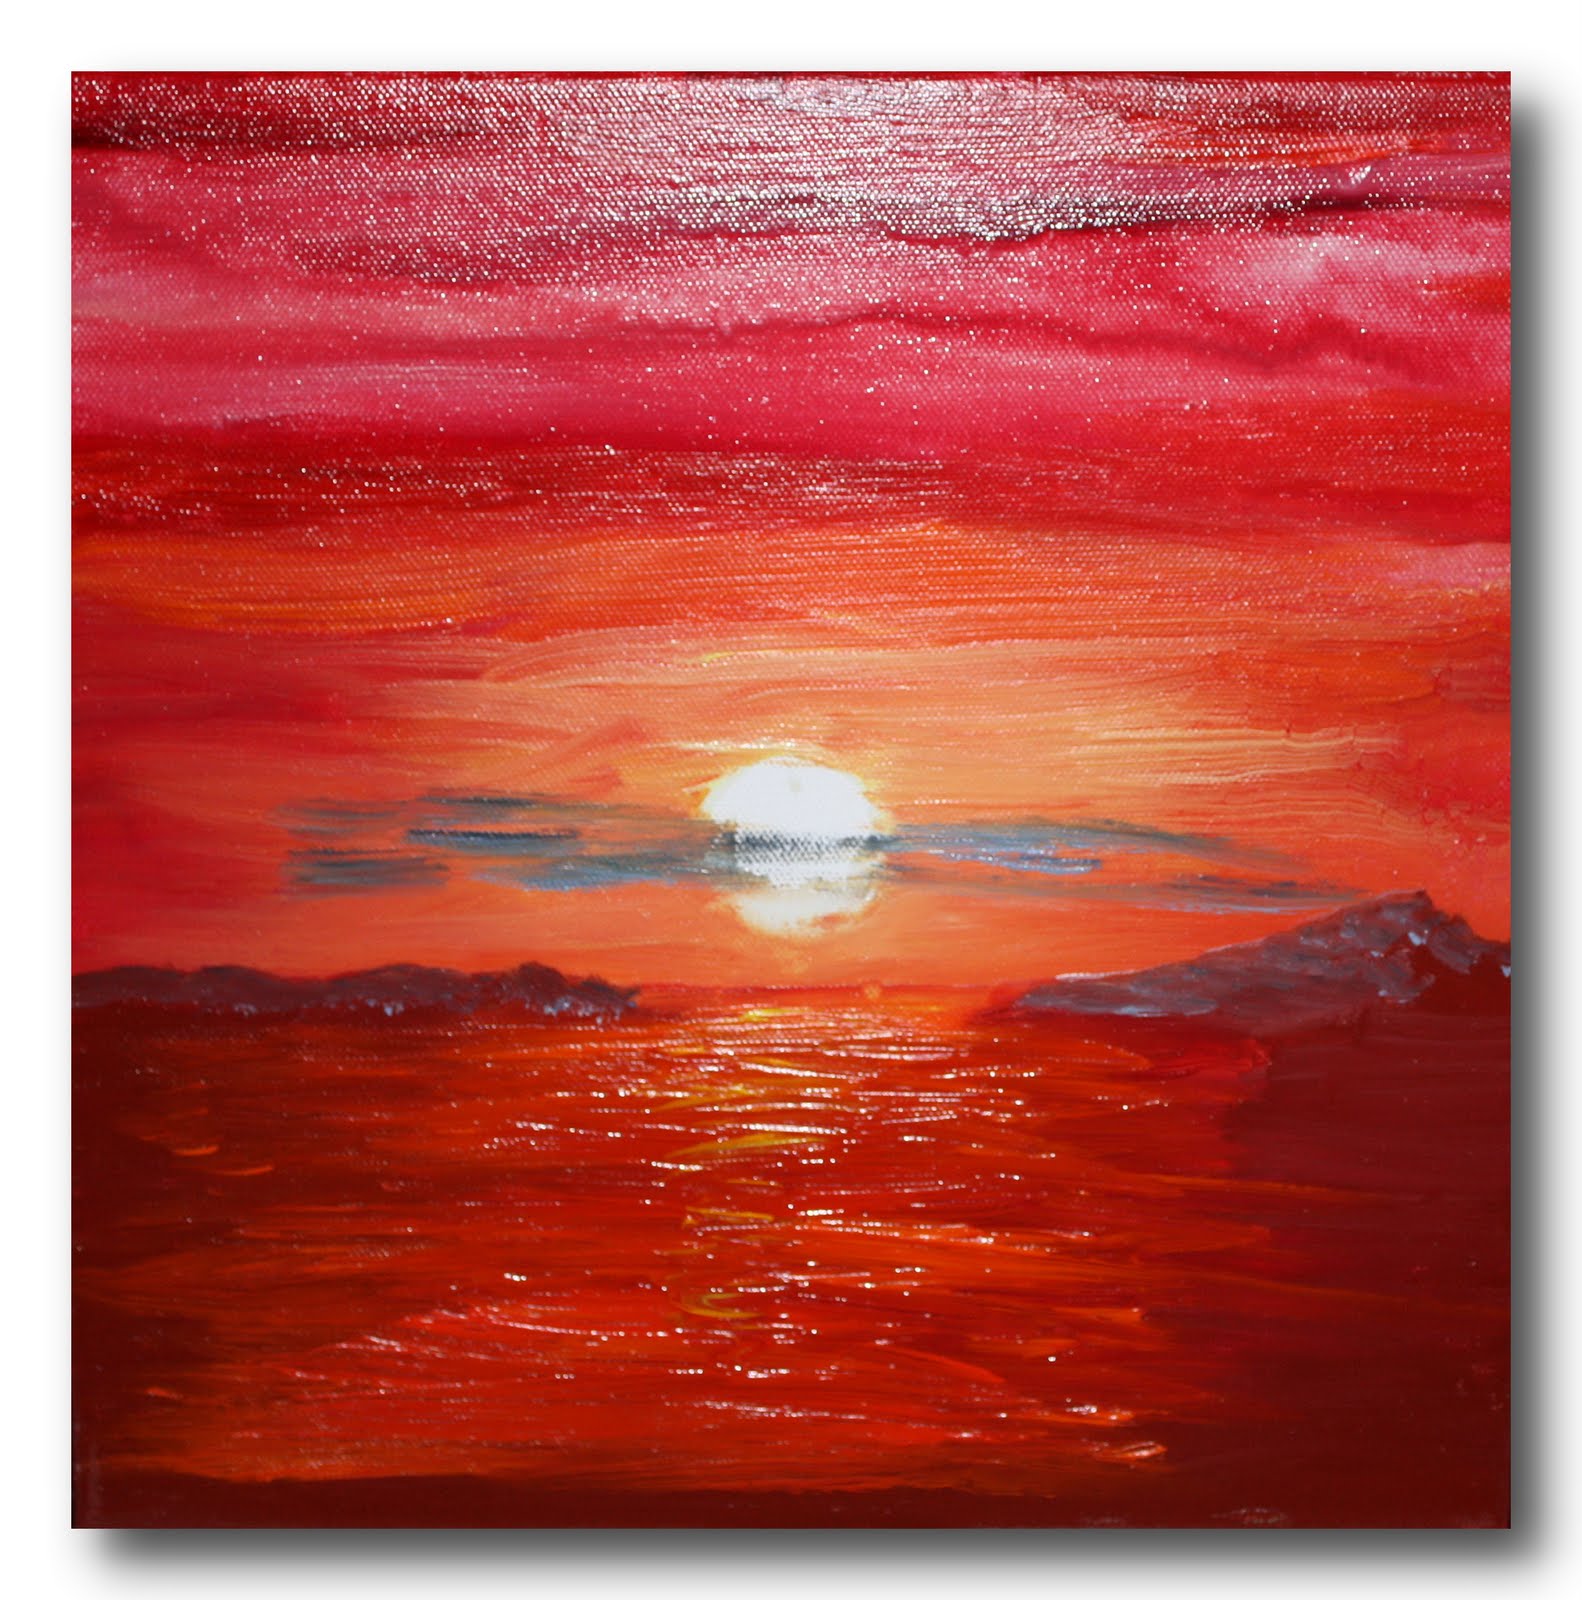 Kunstblog-Celine: Ölmalerei "Sonnenuntergang am Meer"